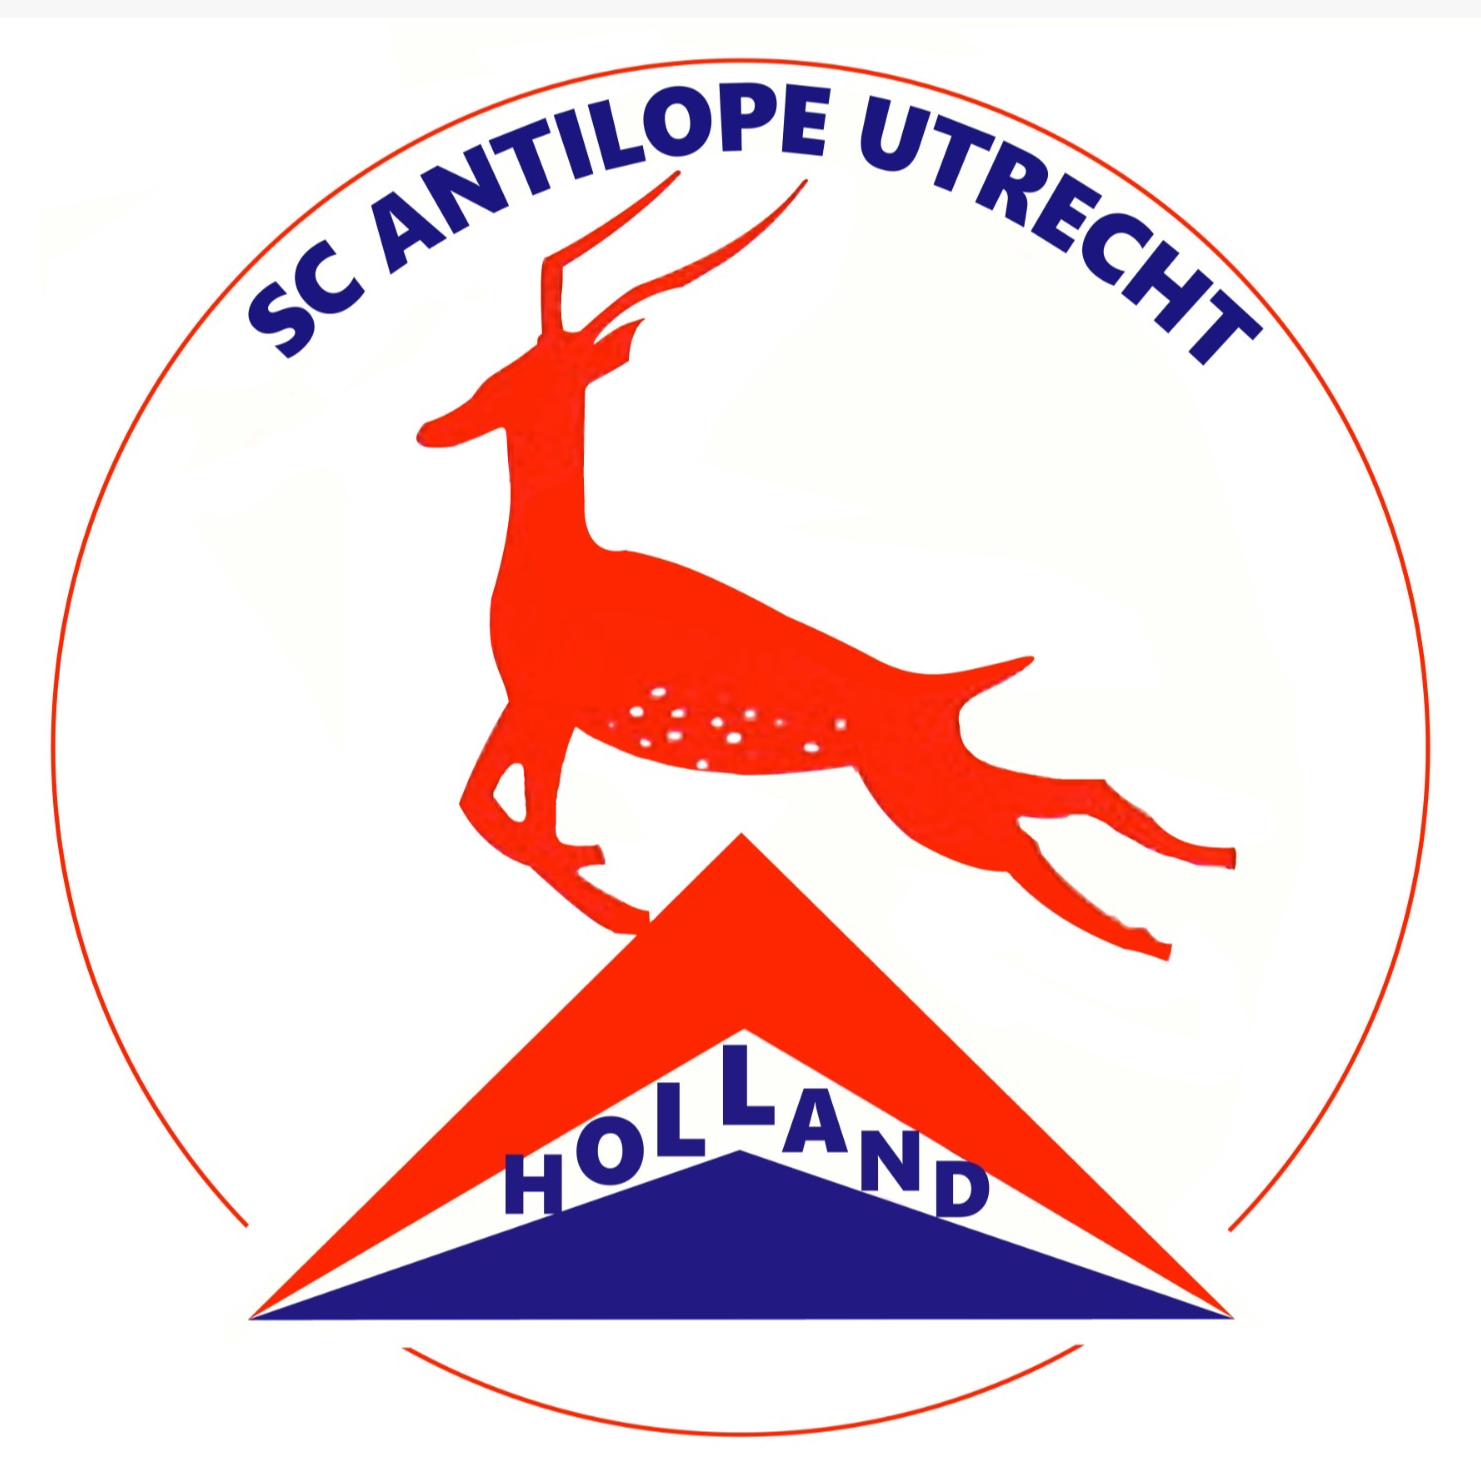 Rolstoelbasketbalvereniging SC Antilope